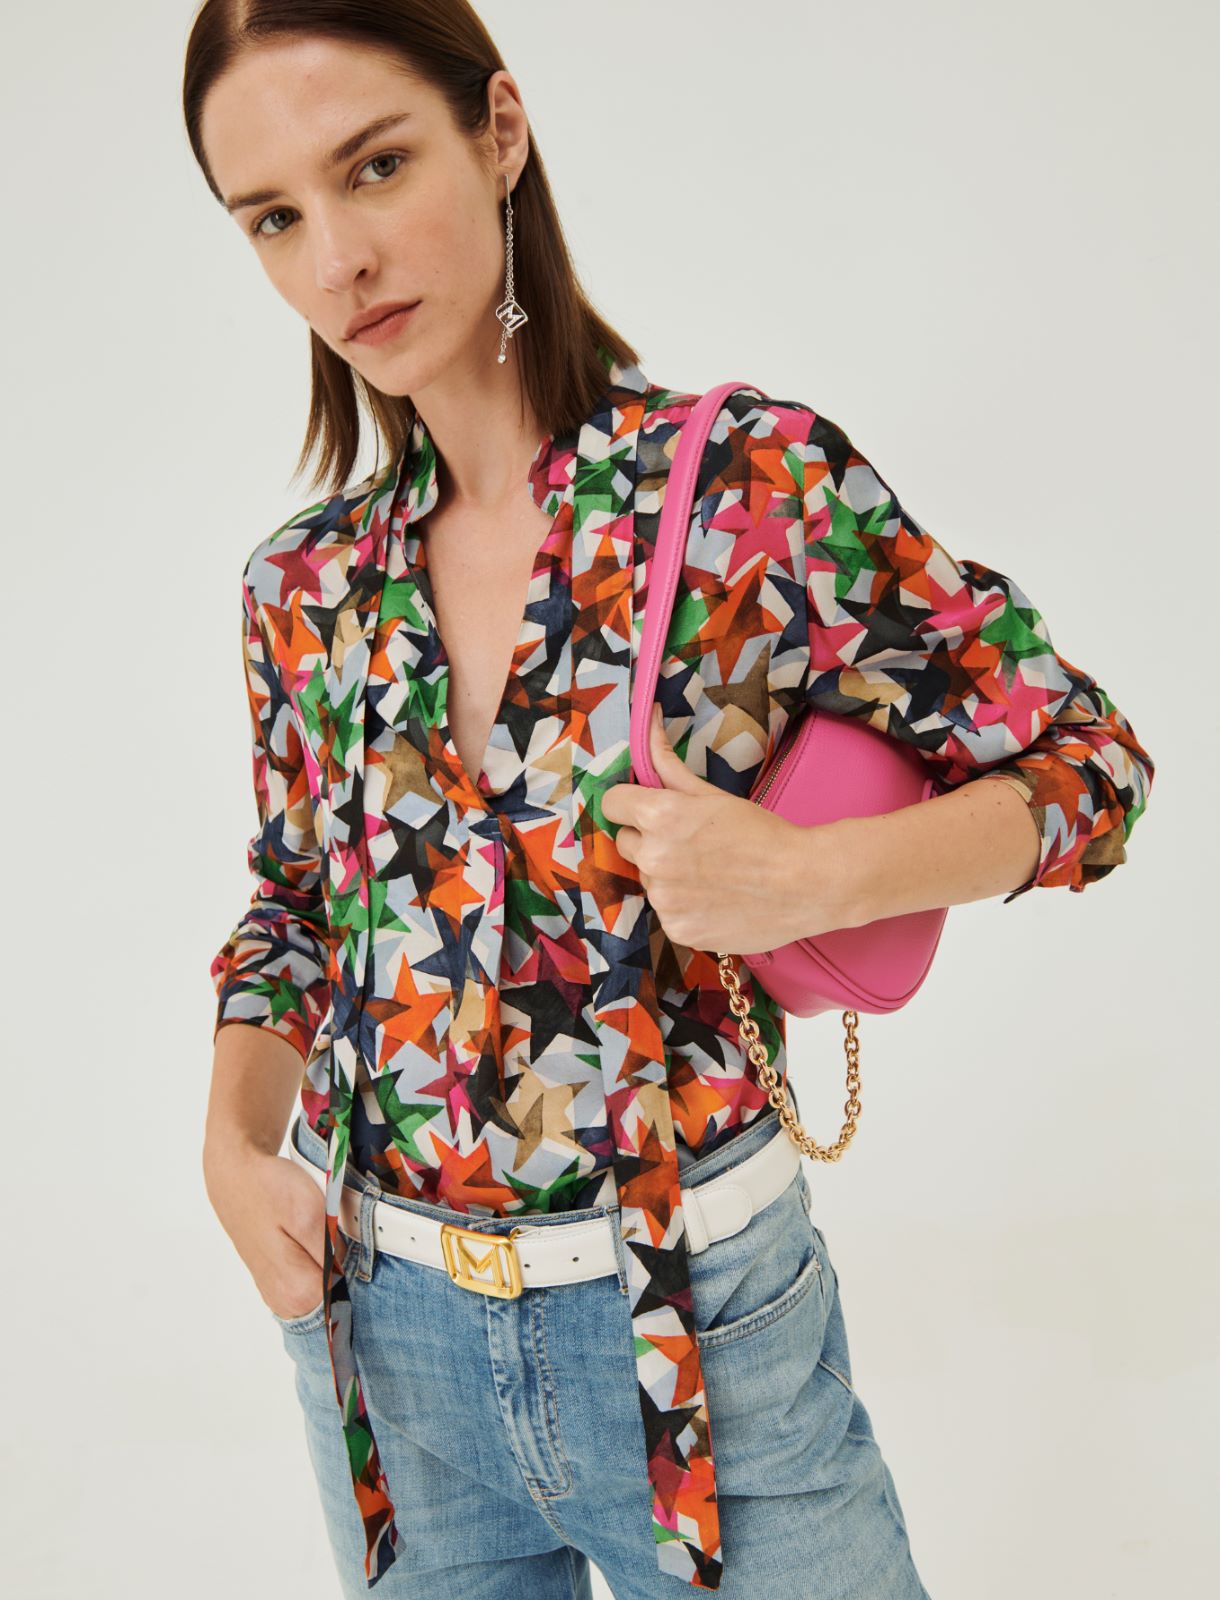 Patterned blouse - Shocking pink - Marina Rinaldi - 3